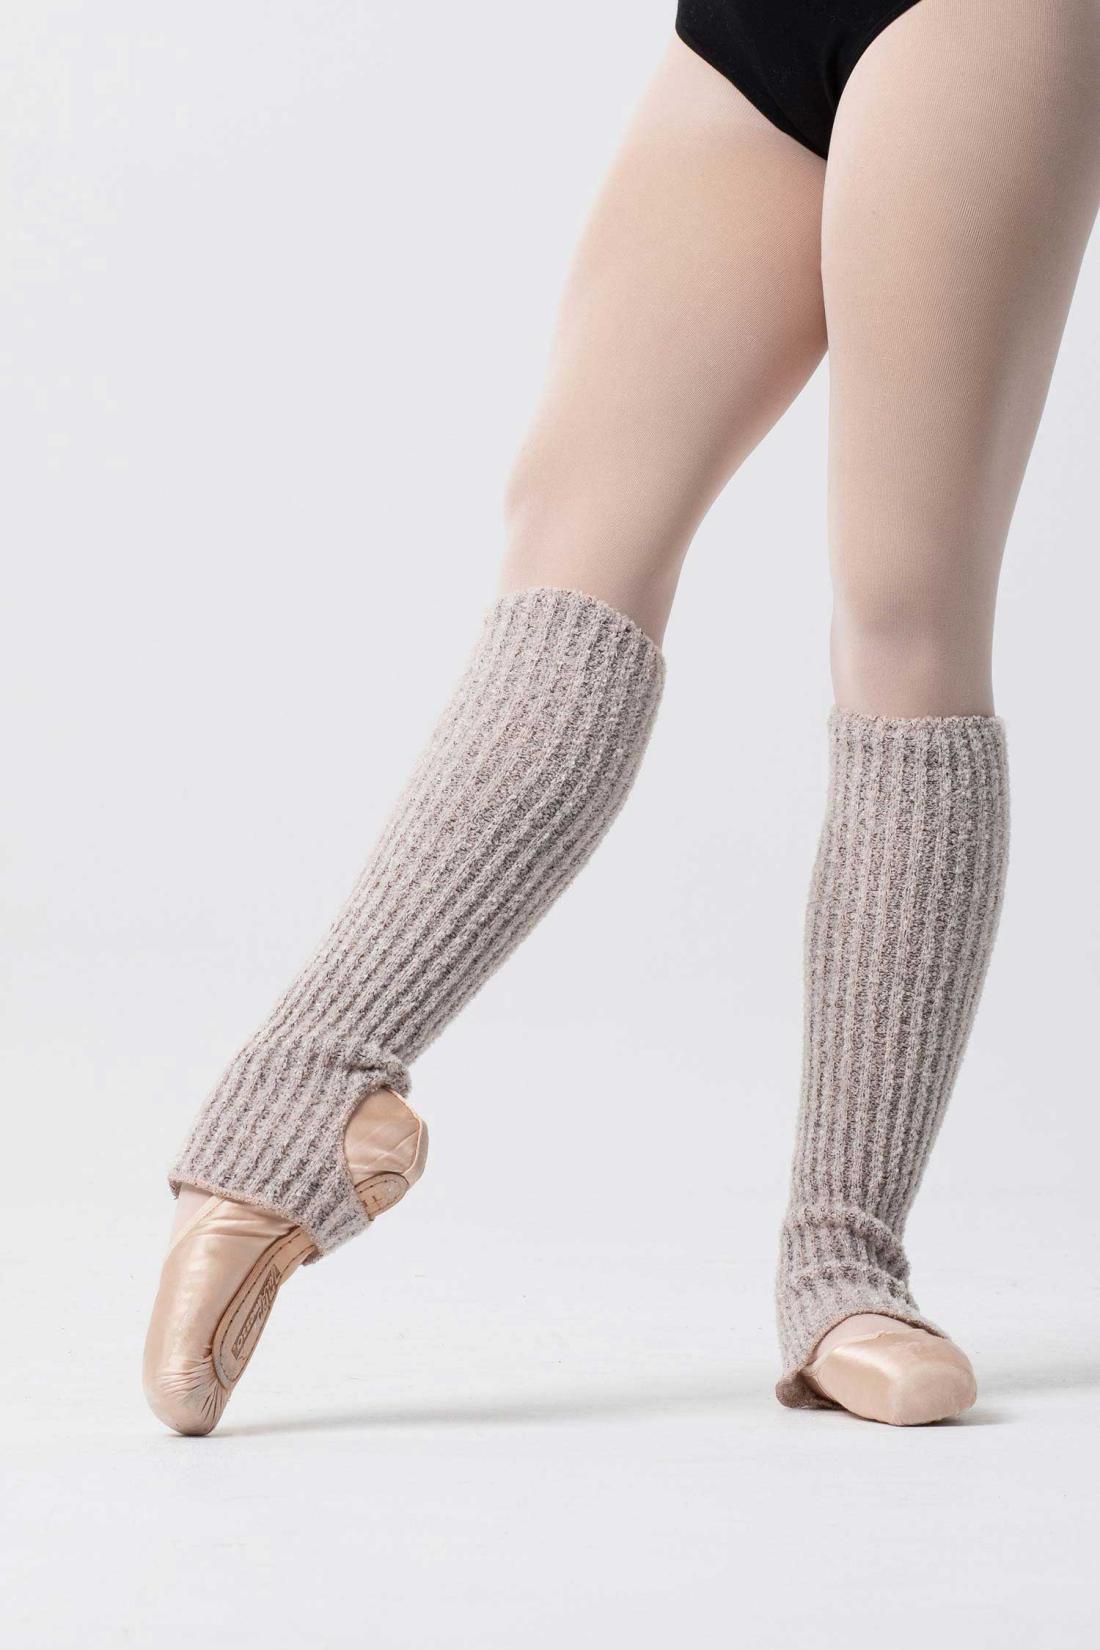 Classic Prebagui knit stirrup Legwarmers Intermezzo dance ballet